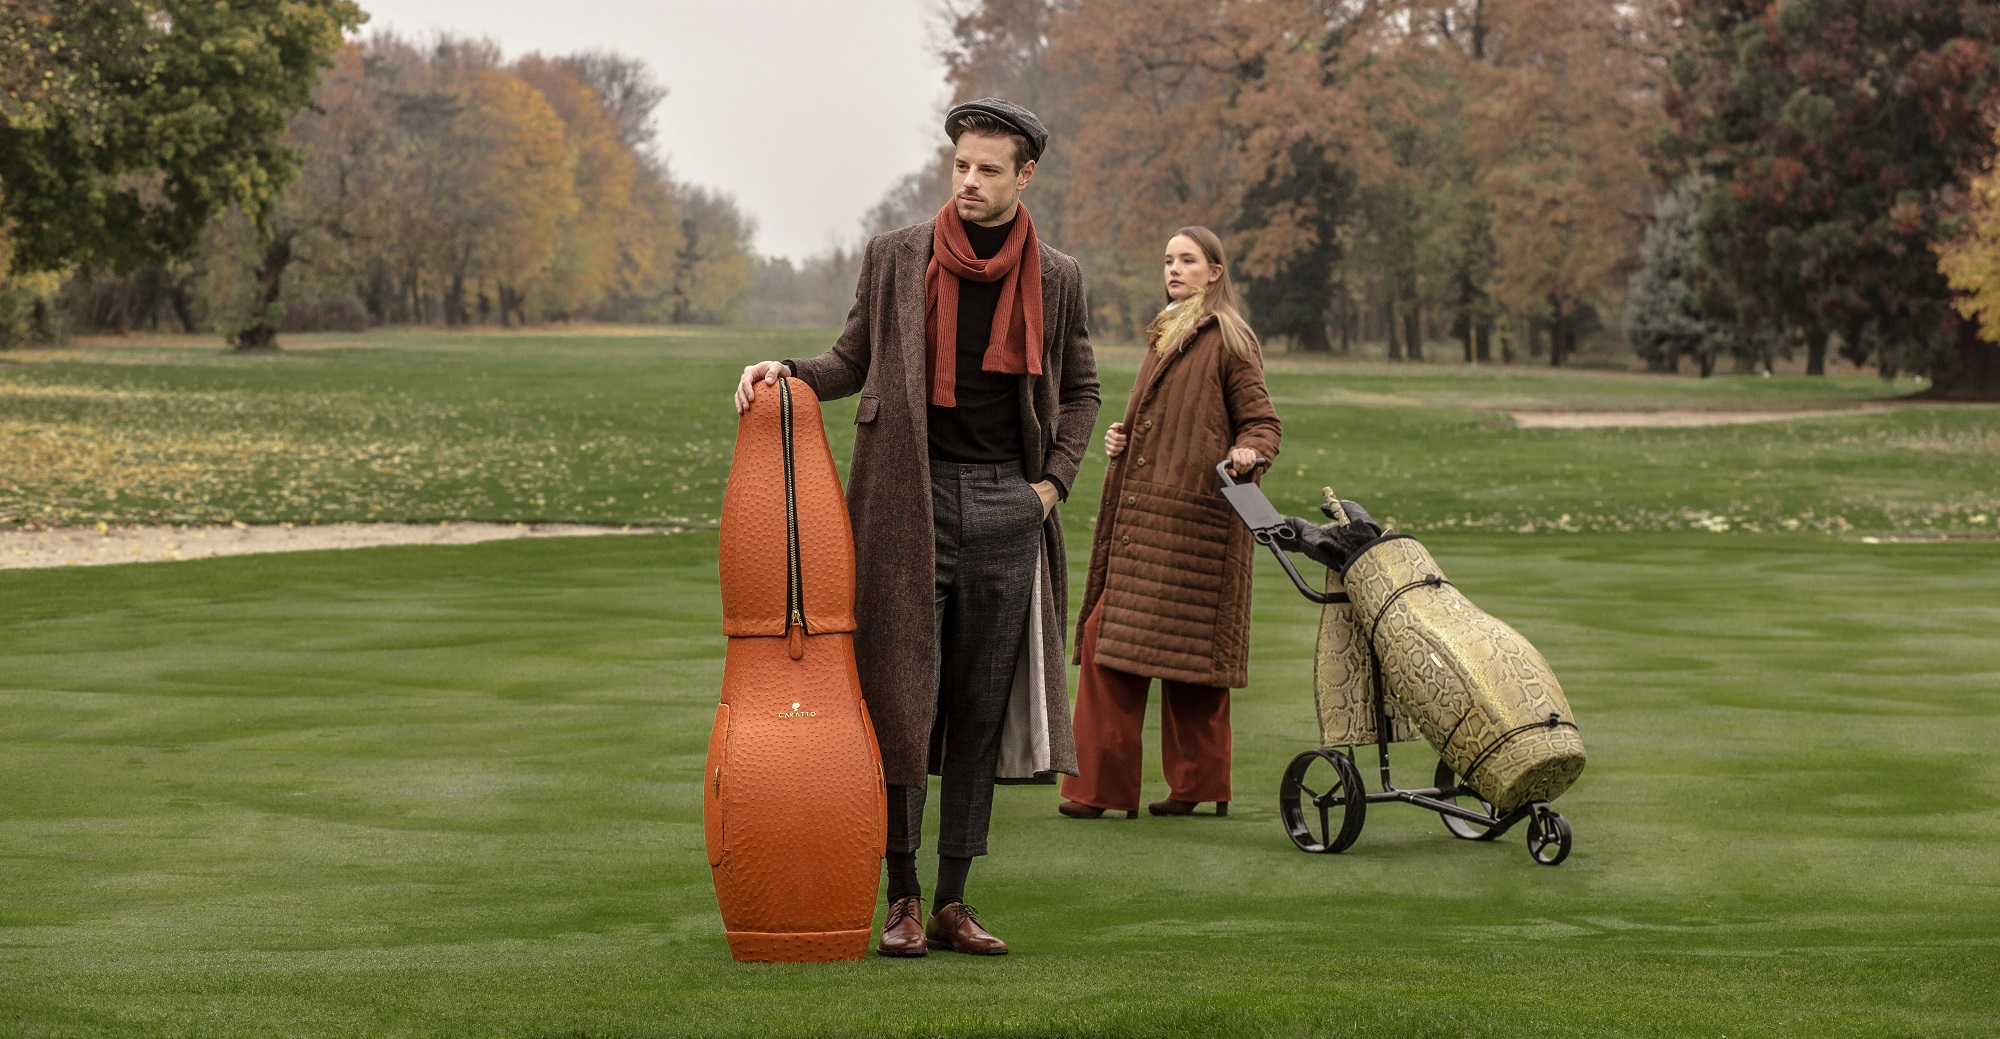 Handmade luxury golf bags CARATTO